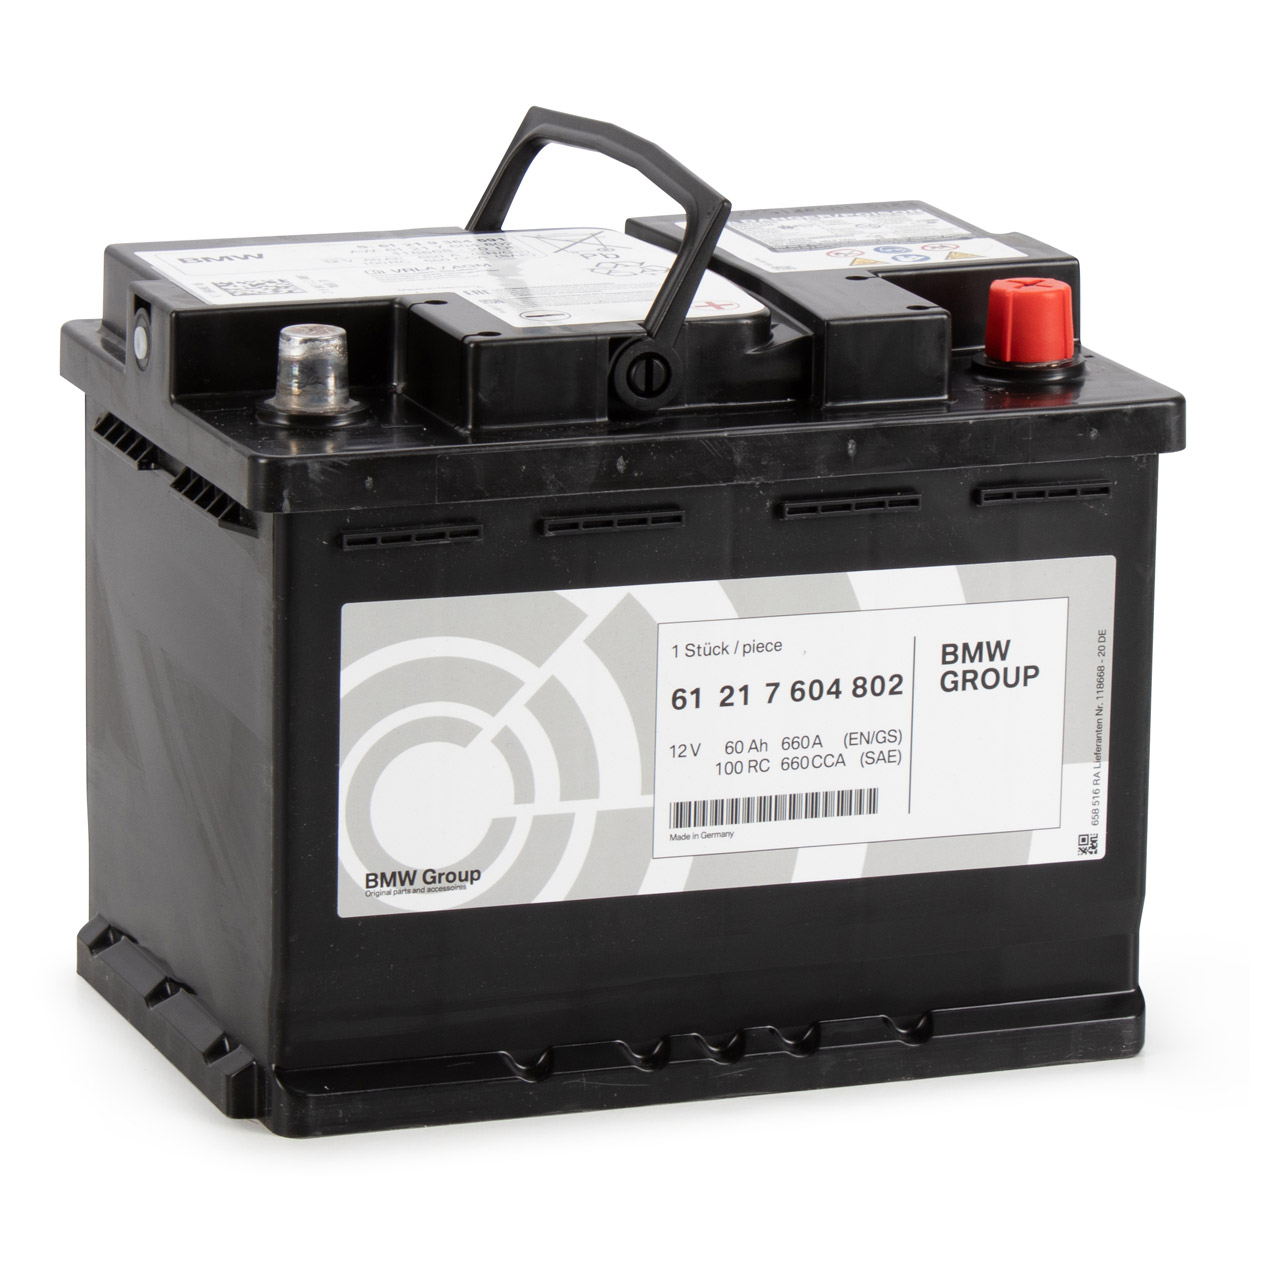 ORIGINAL BMW Autobatterie AGM Batterie Starterbatterie 12V 60Ah 660A 61217604802